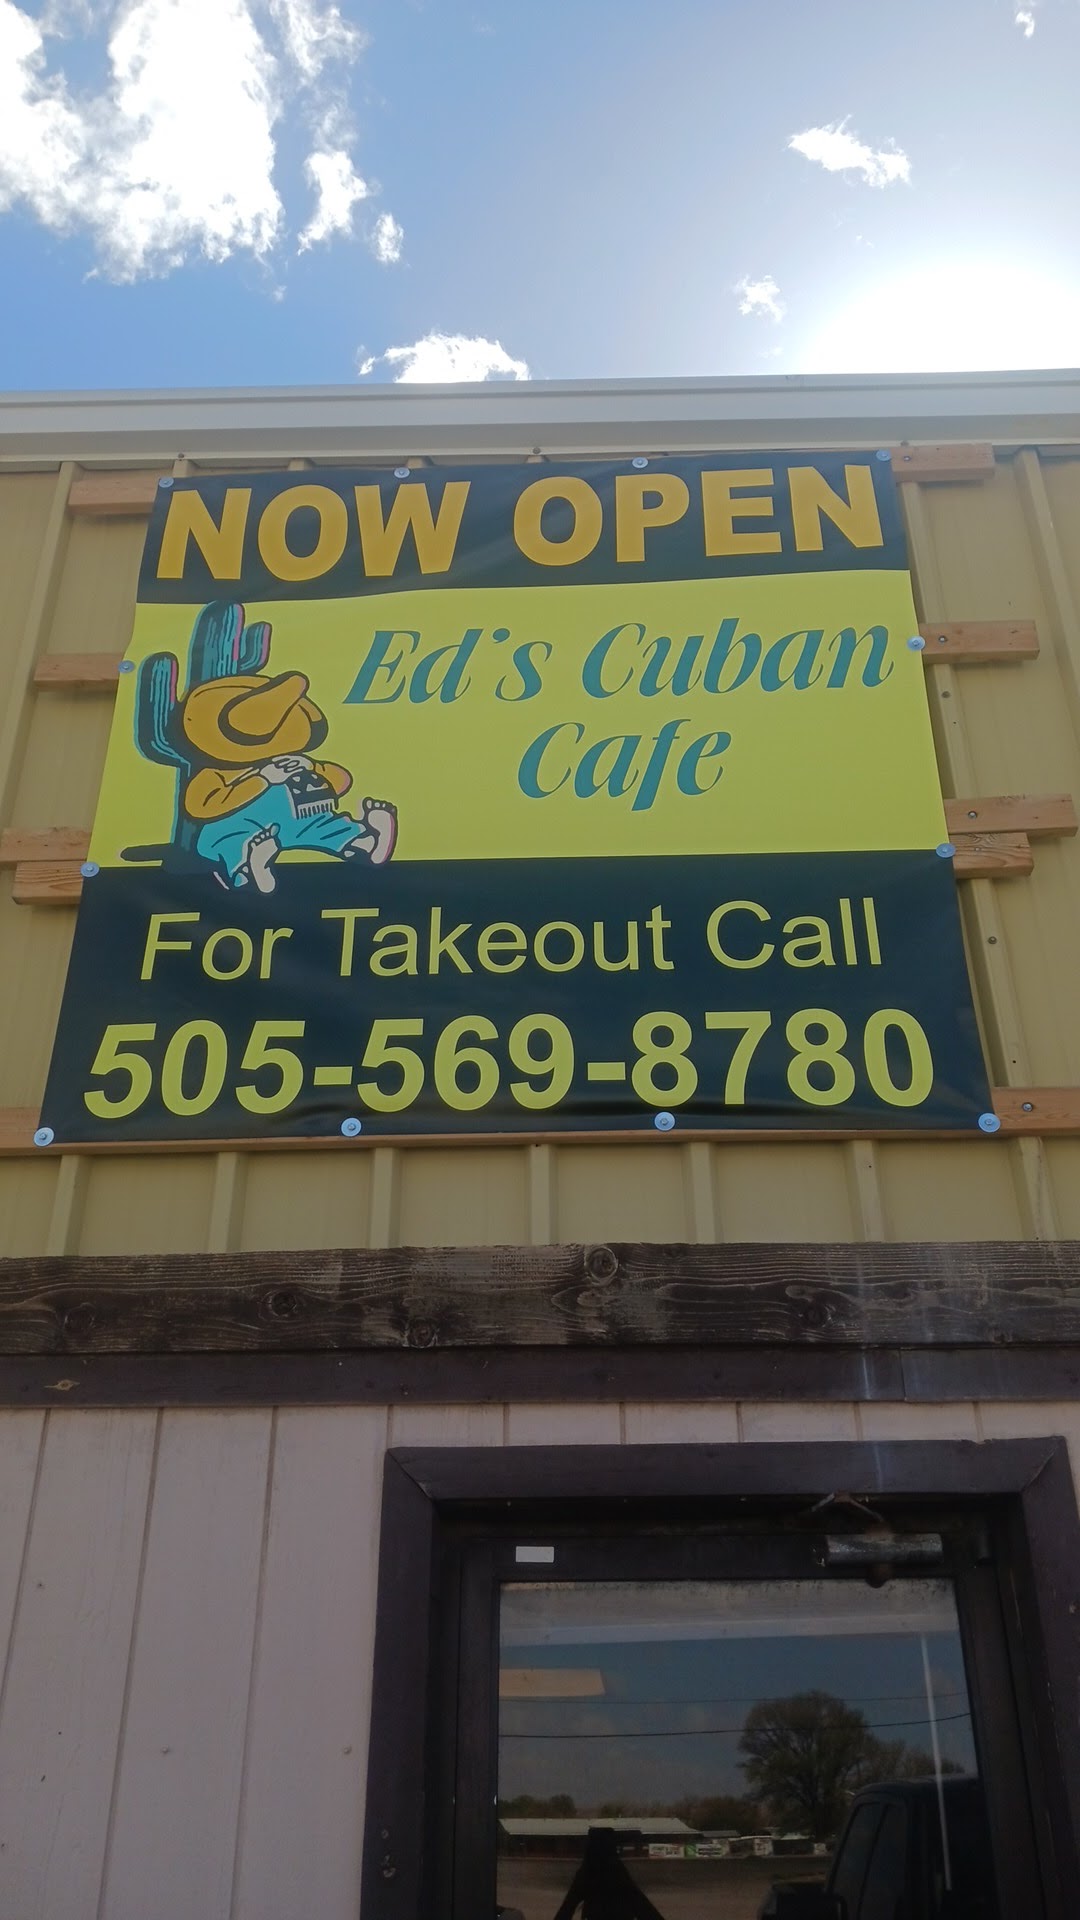 Ed's Cuban Café